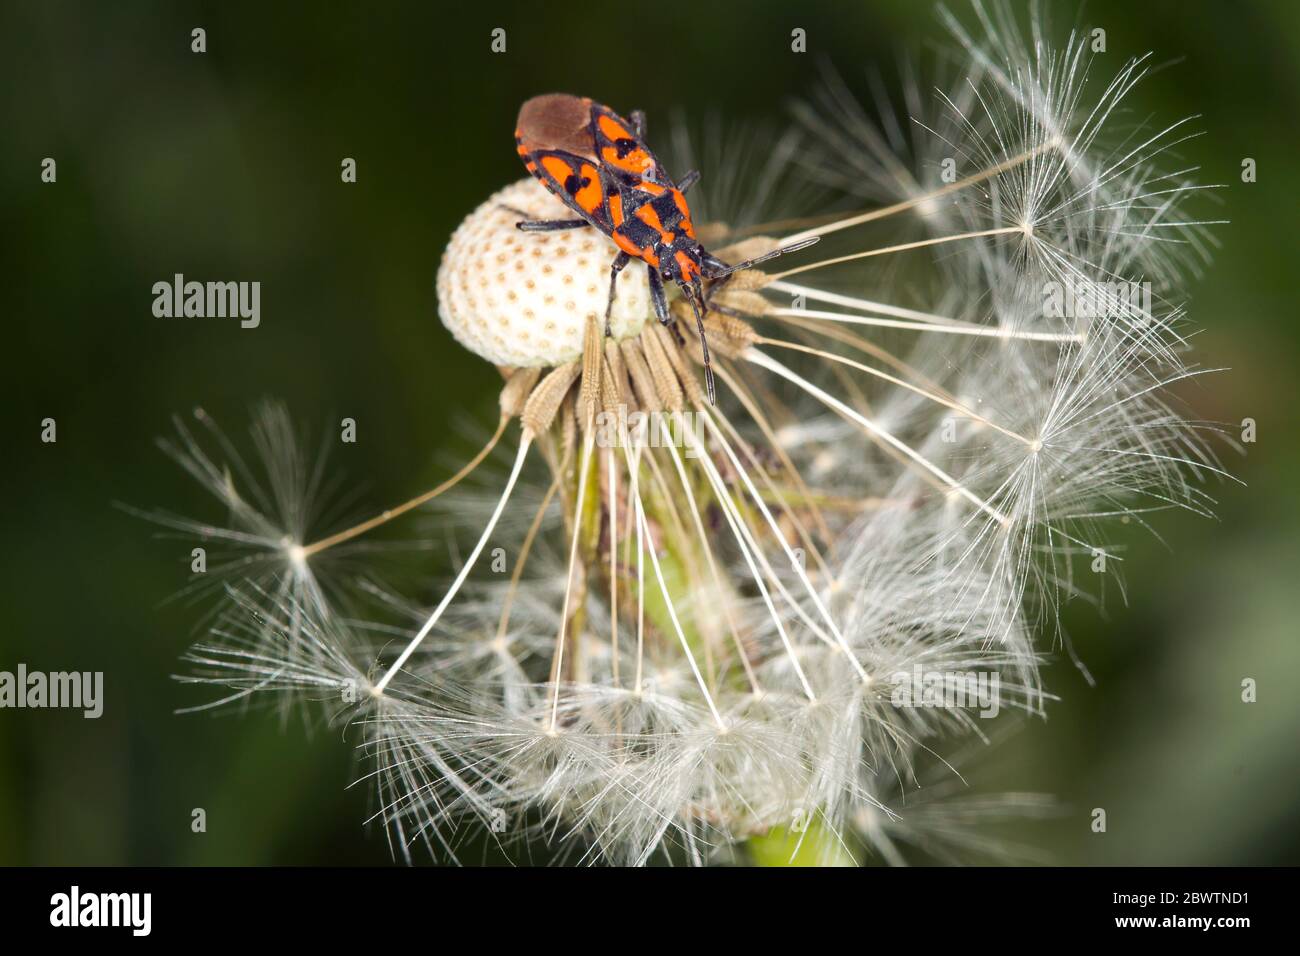 Germany, Close-up of firebug (Pyrrhocoris apterus) crawling on dandelion seed head Stock Photo